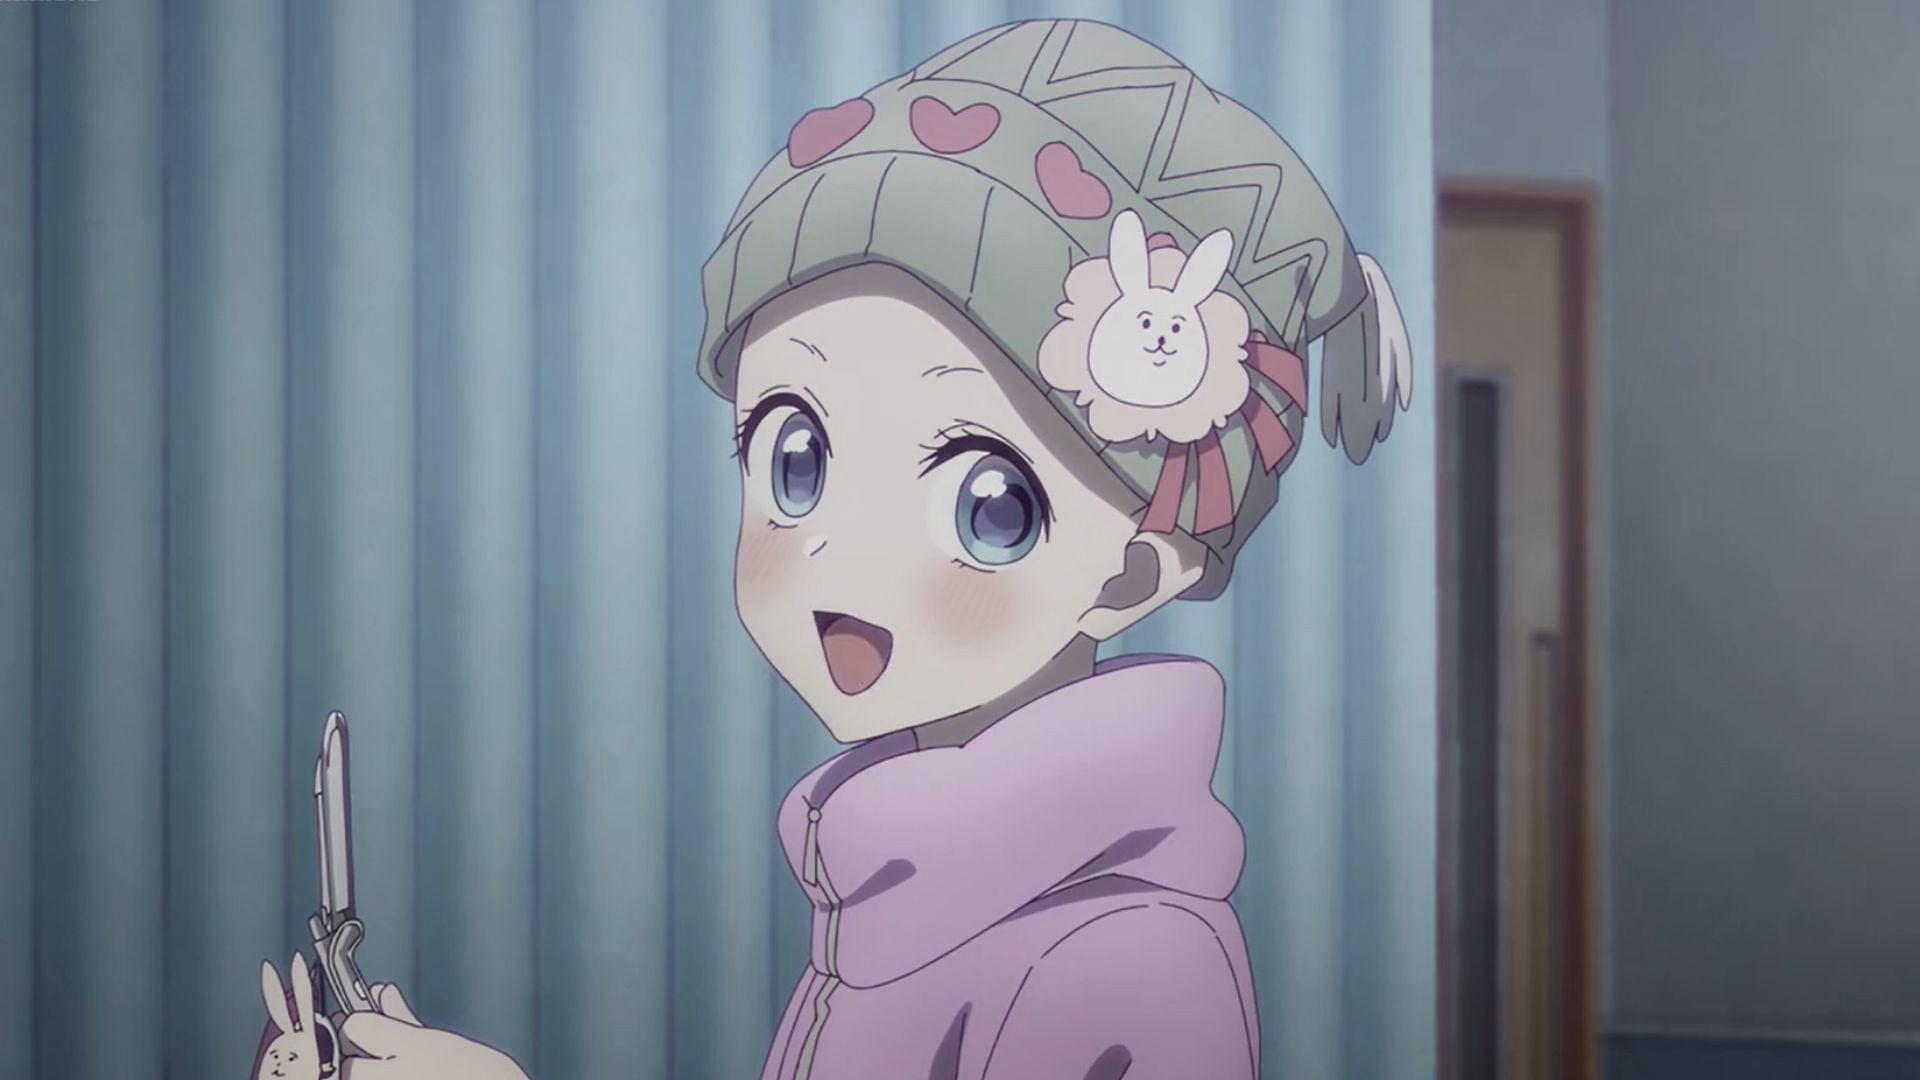 Sarina Tendouji as seen in the Oshi no Ko anime (Image via Doga Kobo)